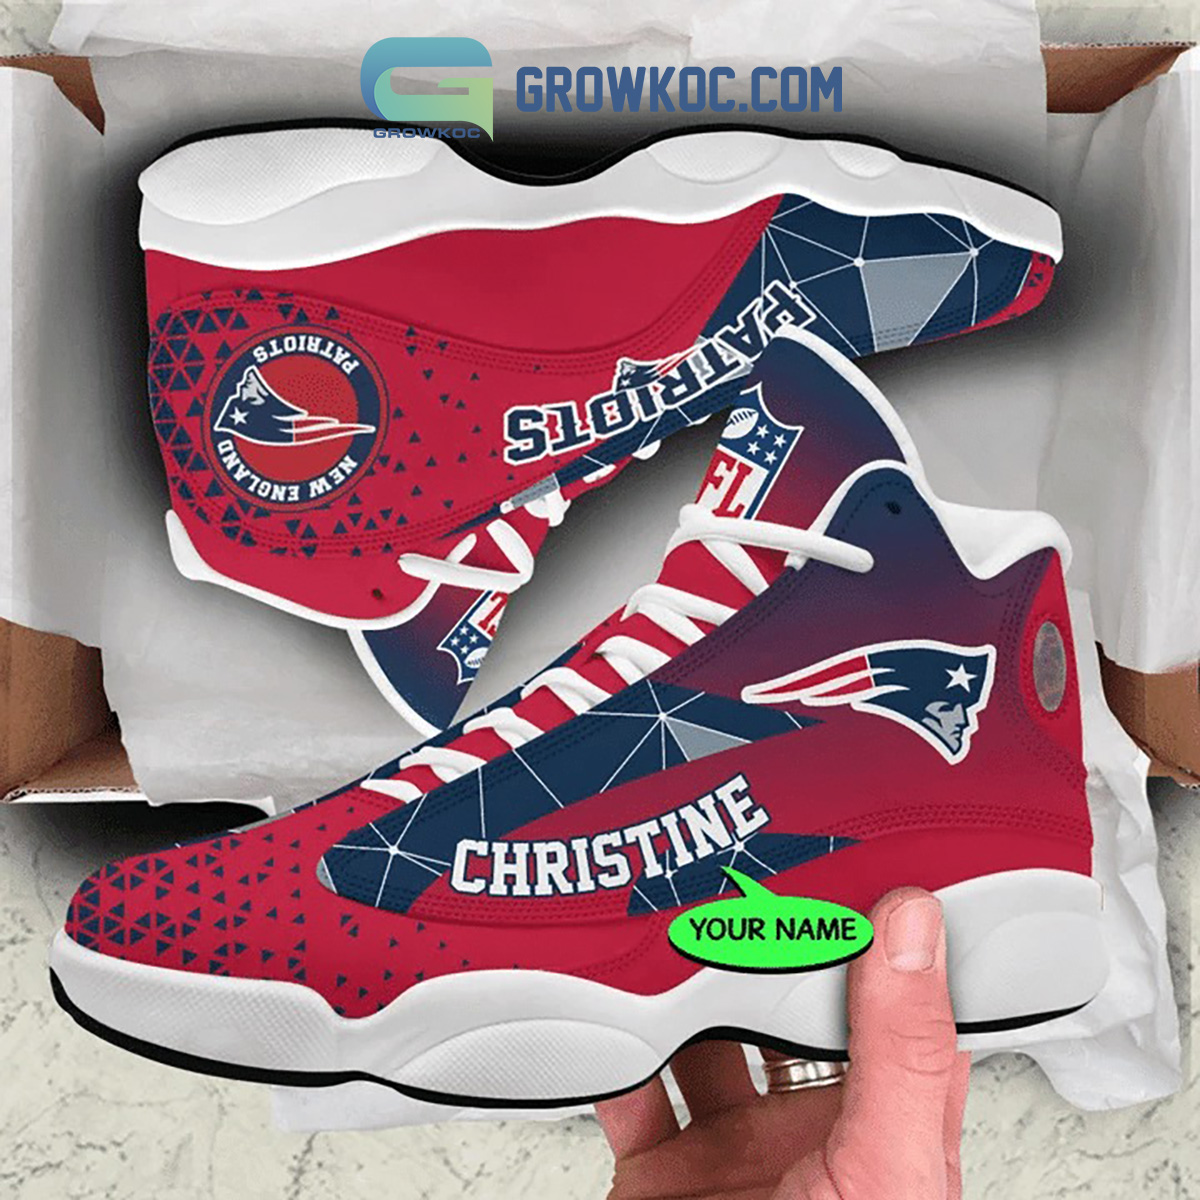 New England Patriots NFL Personalized Air Jordan 13 Sport Shoes - Growkoc